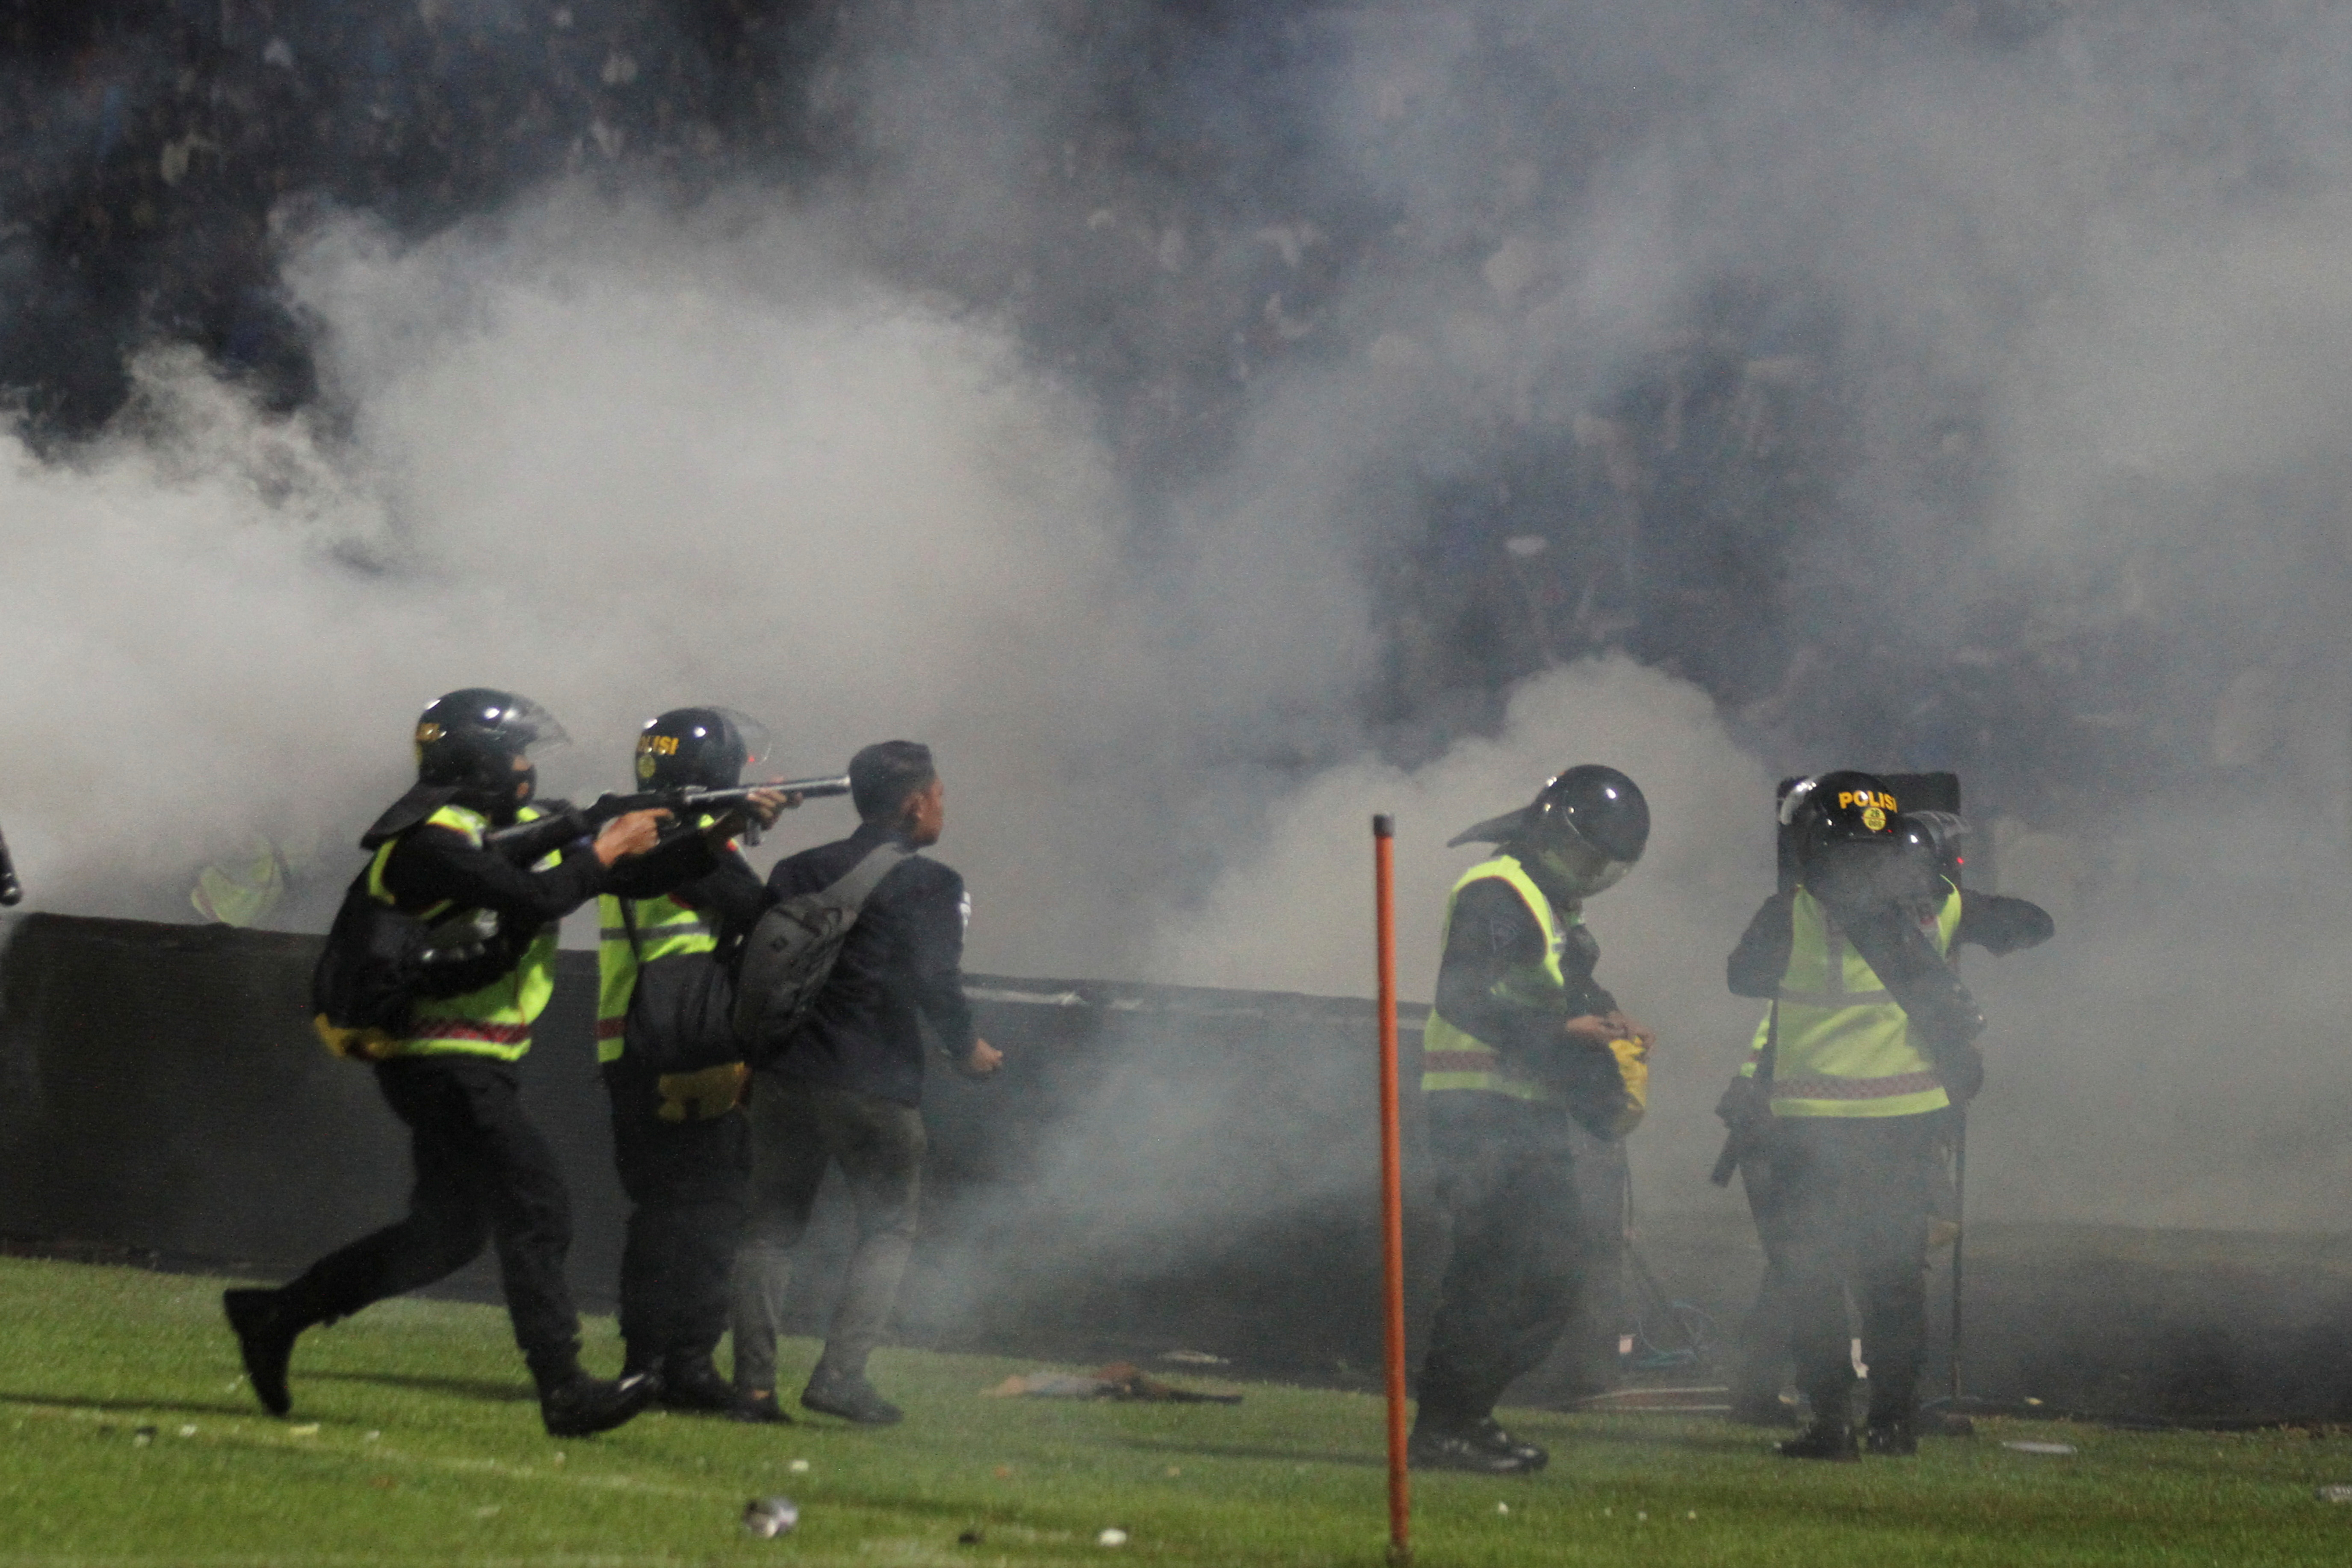 A riot police officer fires tear gas after the football match between Arema vs Persebaya at Kanjuruhan Stadium in Malang